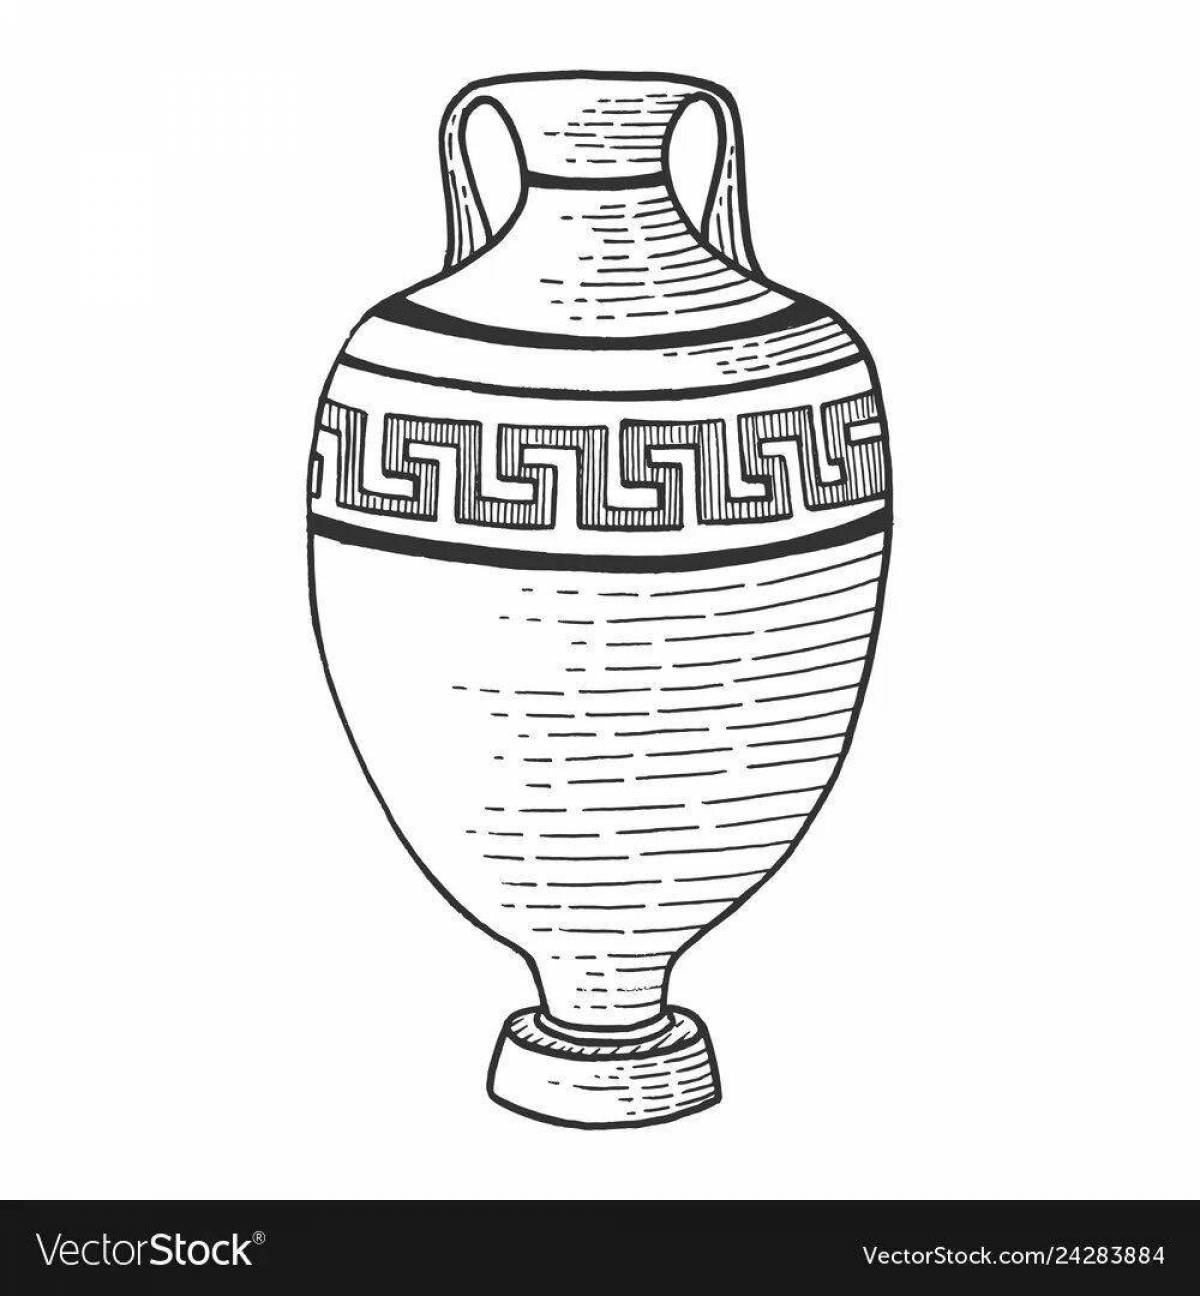 Coloring page charming greek vase